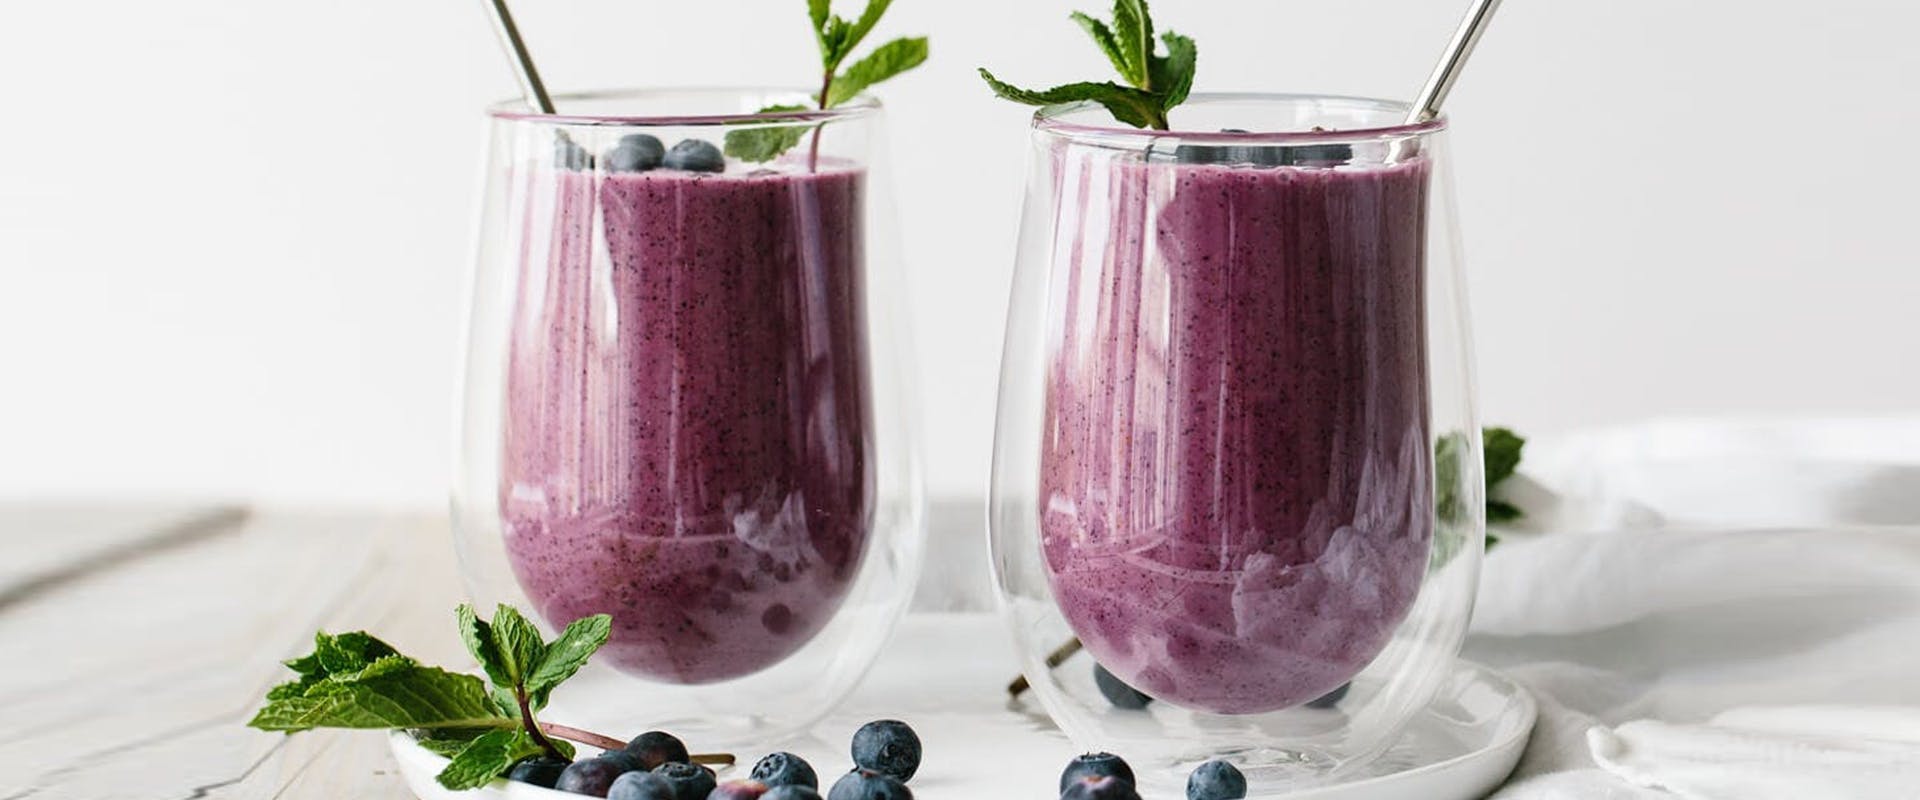 juice beverage drink smoothie blueberry plant fruit food milkshake milk